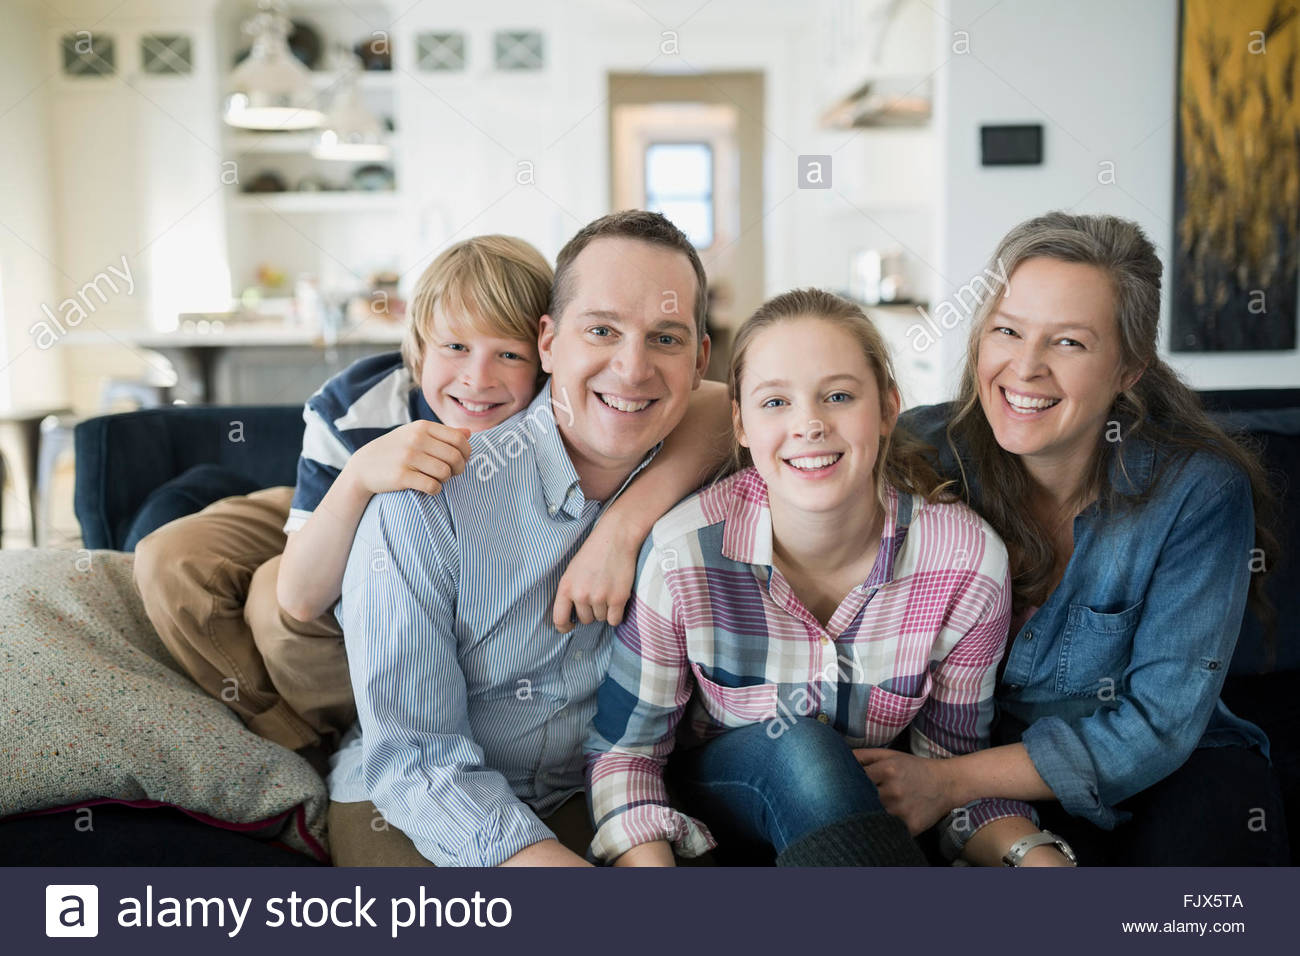 Portrait smiling family on living room sofa Stock Photo